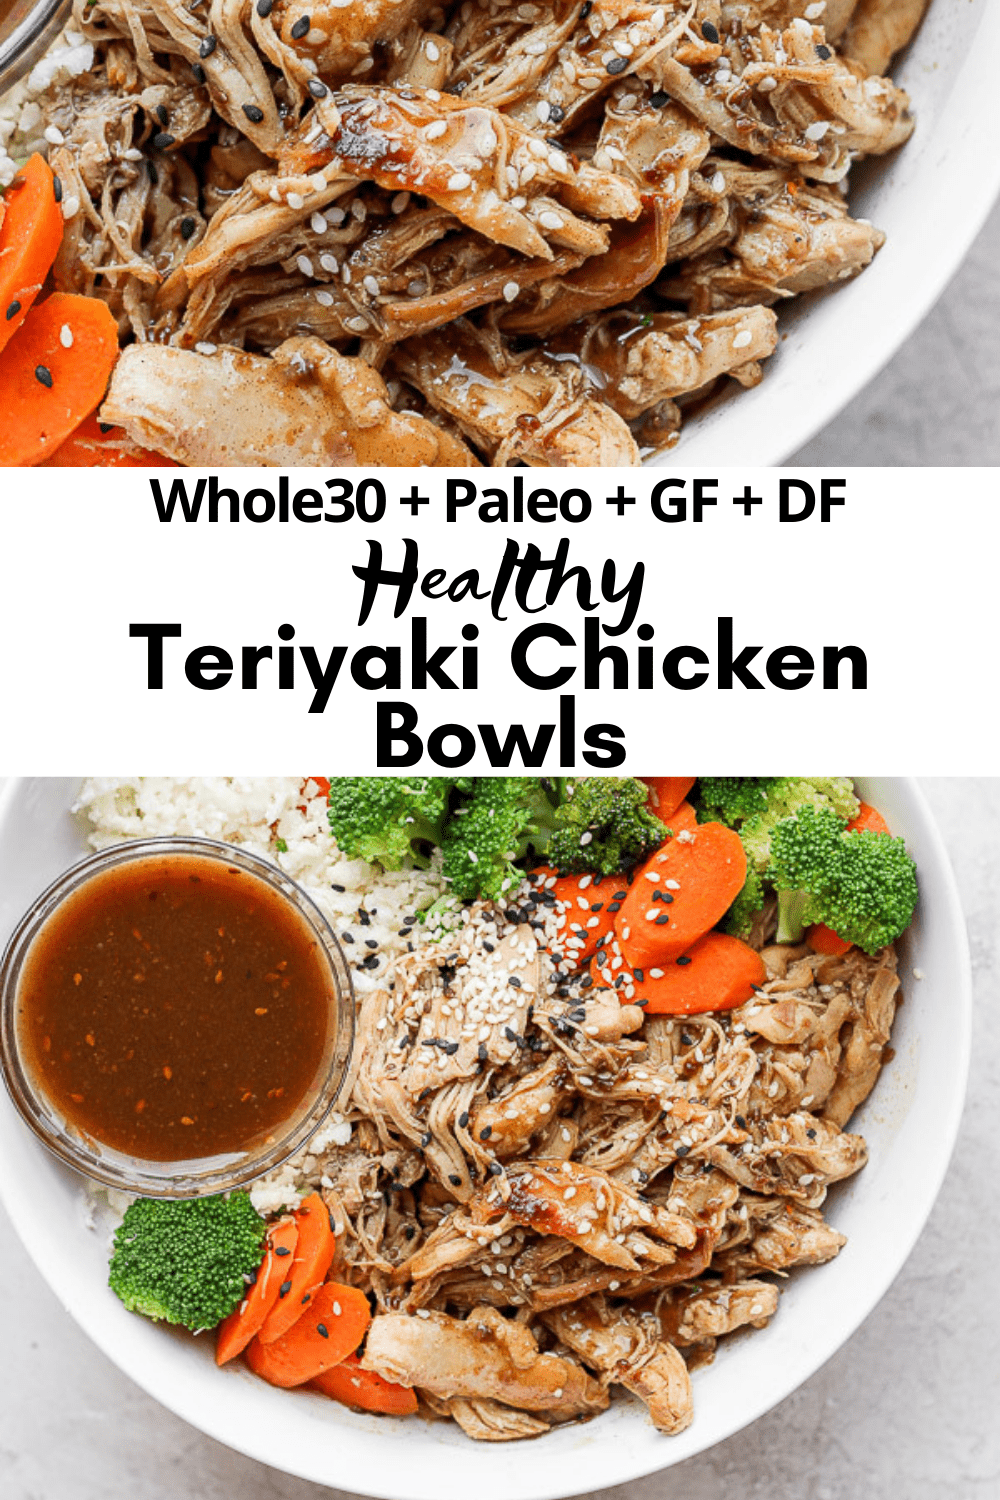 Teriyaki Chicken Bowls